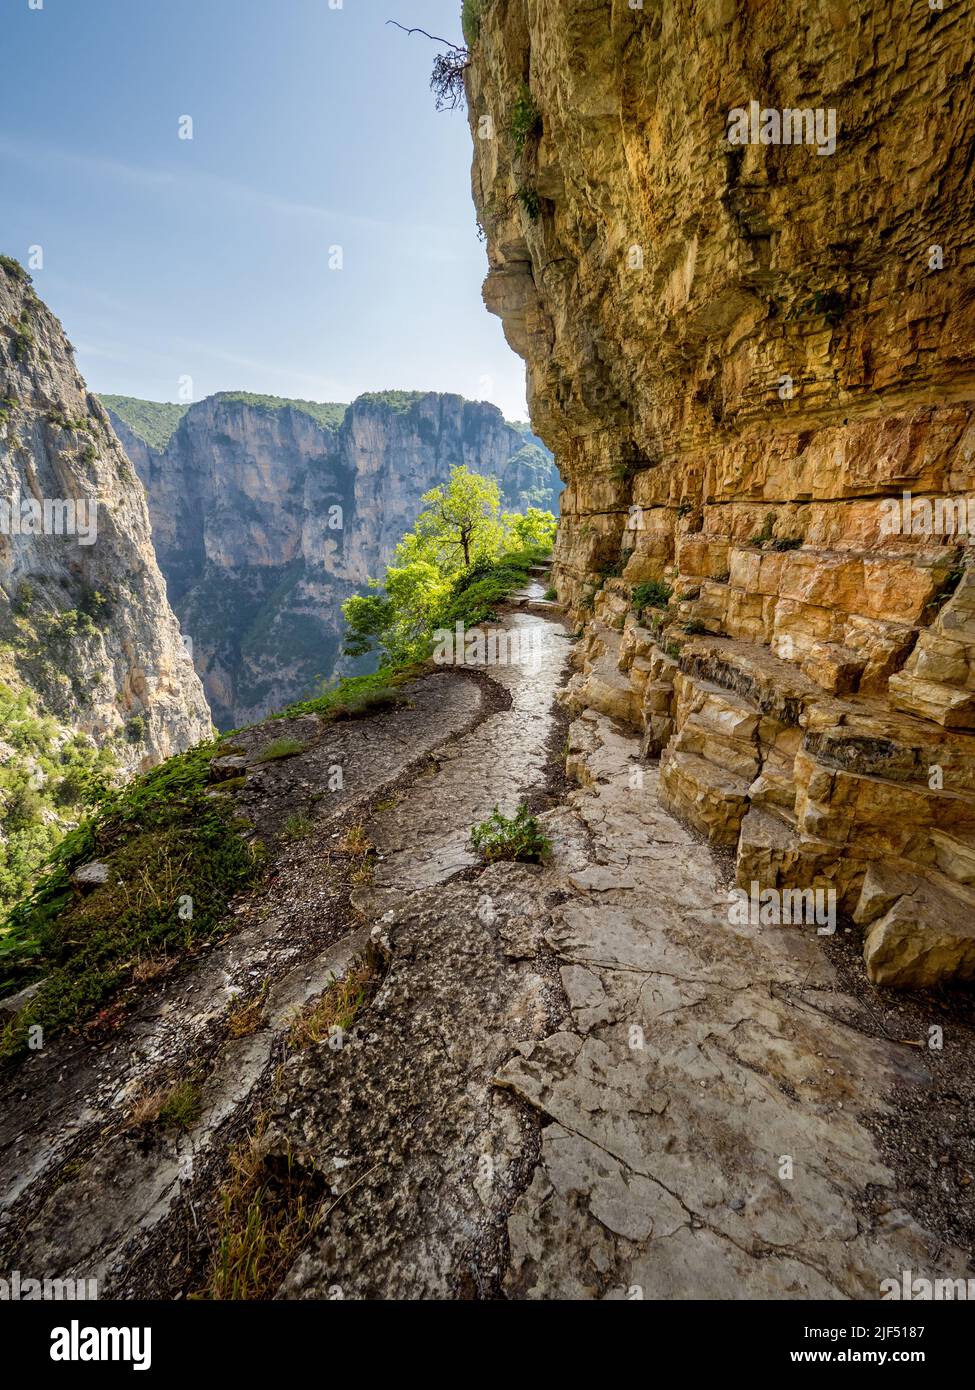 Narrow precarious path hewn into the sheer cliff face beyond Agia Paraskevi Monastery high above the Vikos Gorge in the Zagori region of Greece Stock Photo